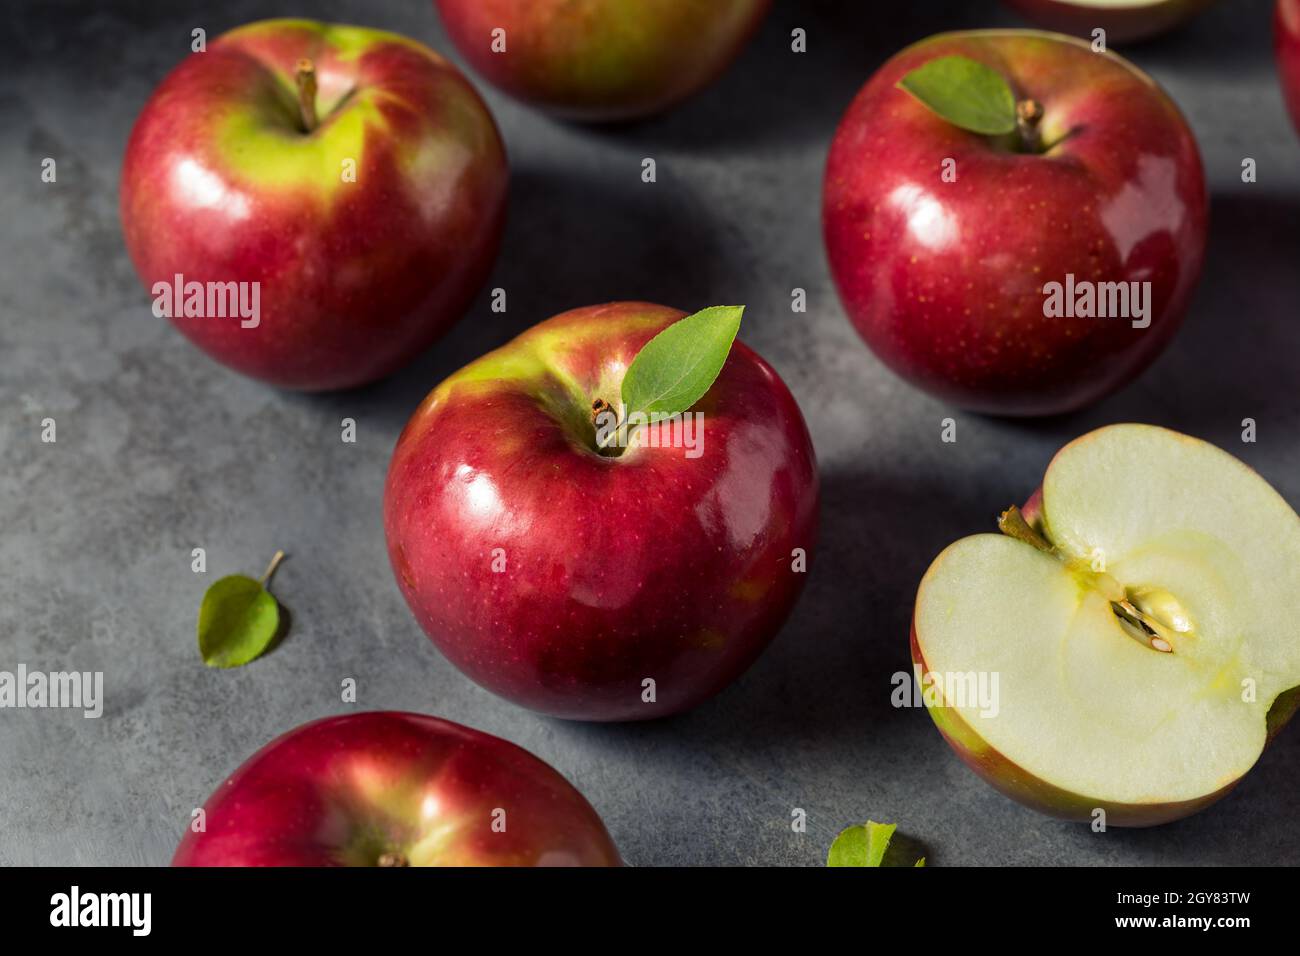 https://c8.alamy.com/comp/2GY83TW/healthy-organic-mcintosh-apples-ready-to-eat-2GY83TW.jpg